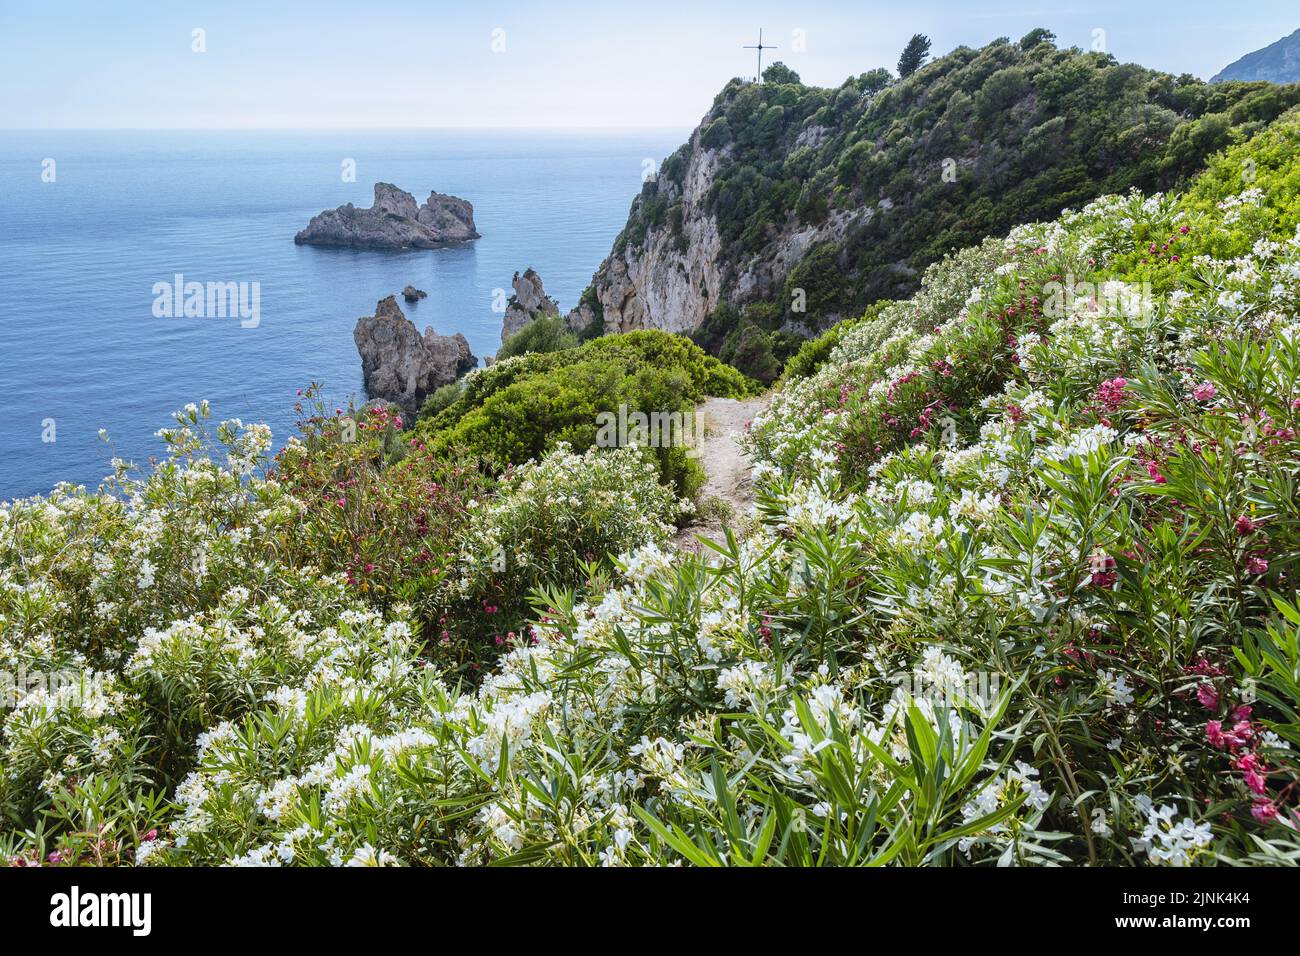 Skeludi islet seen from shore in Palaiokastritsa famous resort town on Greek Island of Corfu Stock Photo